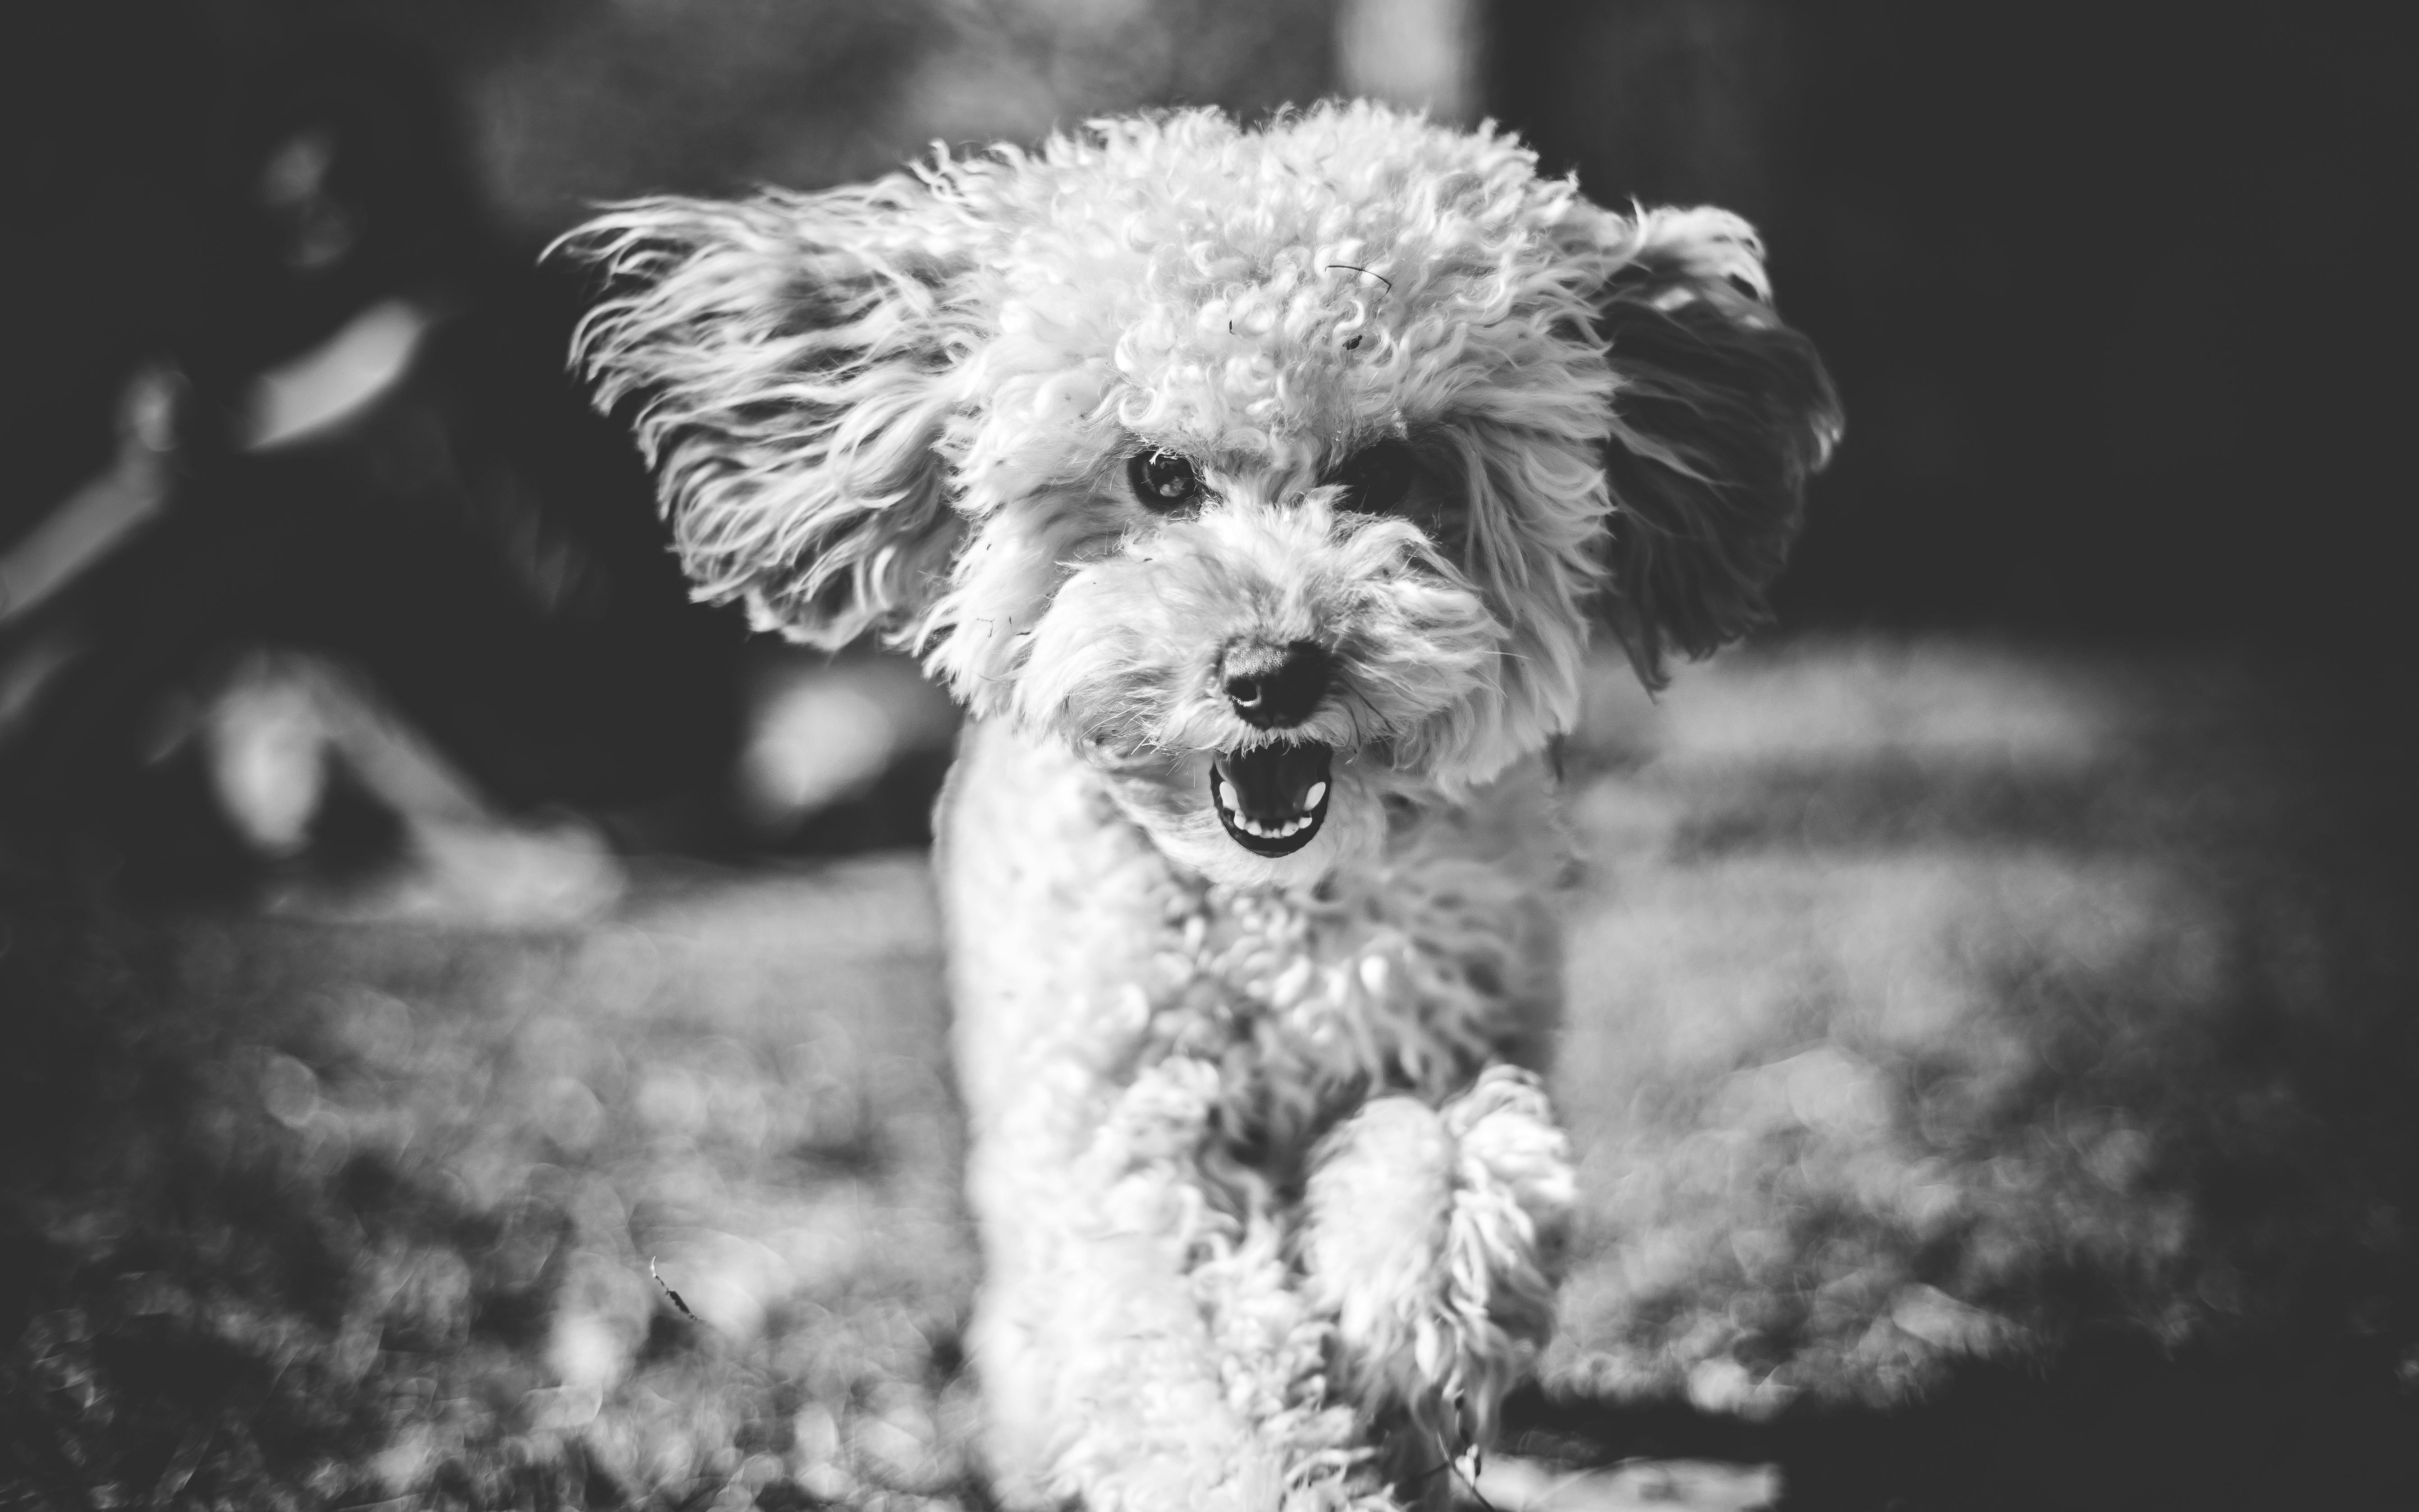 grayscale photo of dog runnig